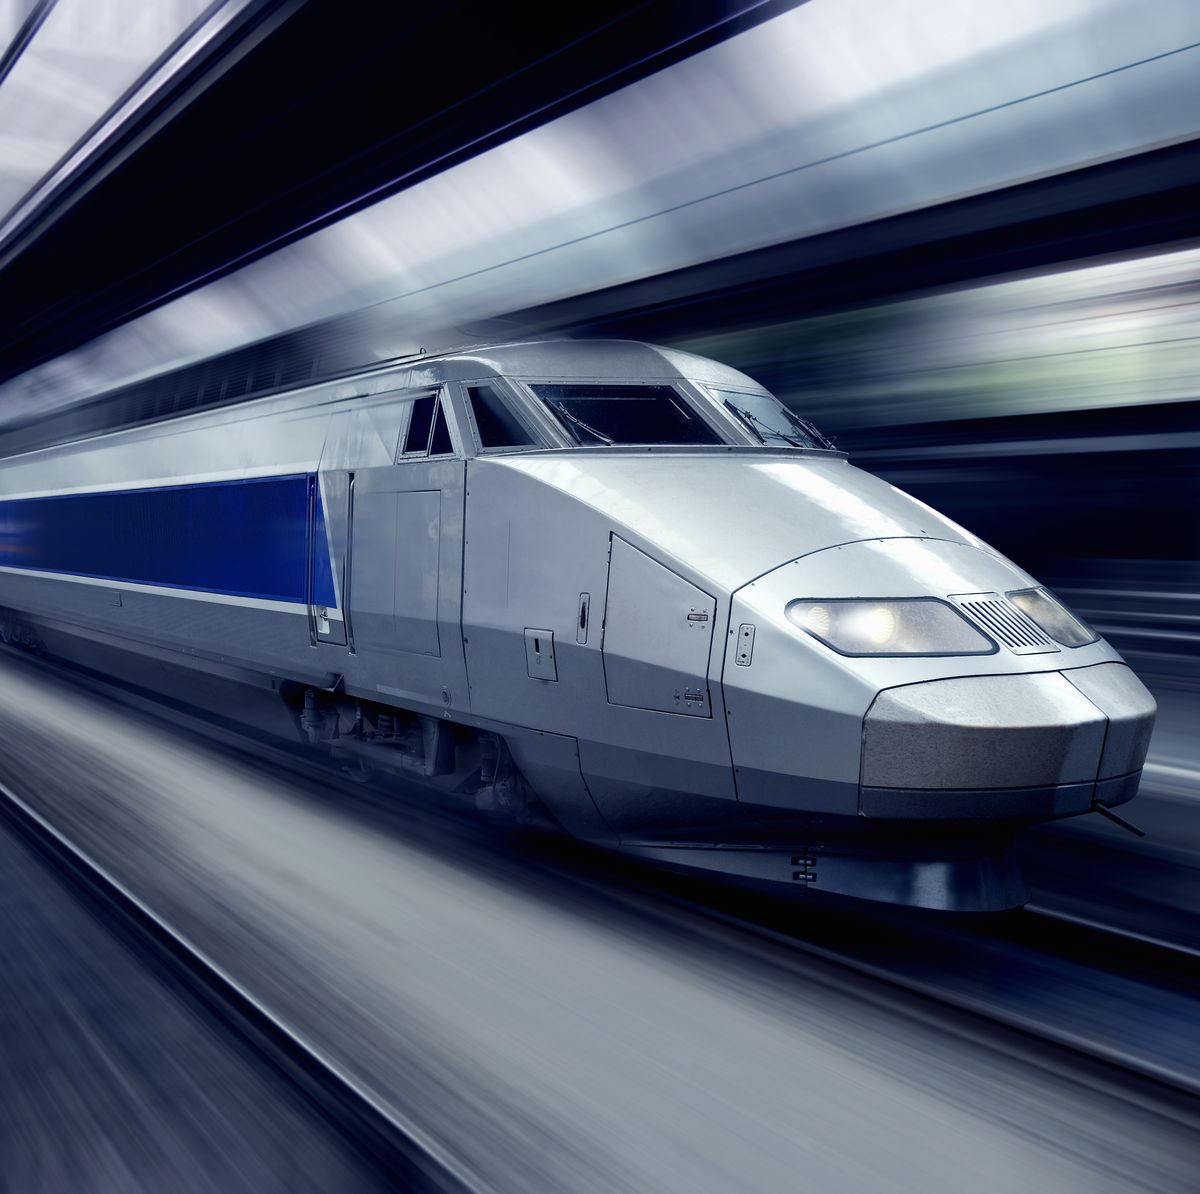 tgv train at speed blurred motion